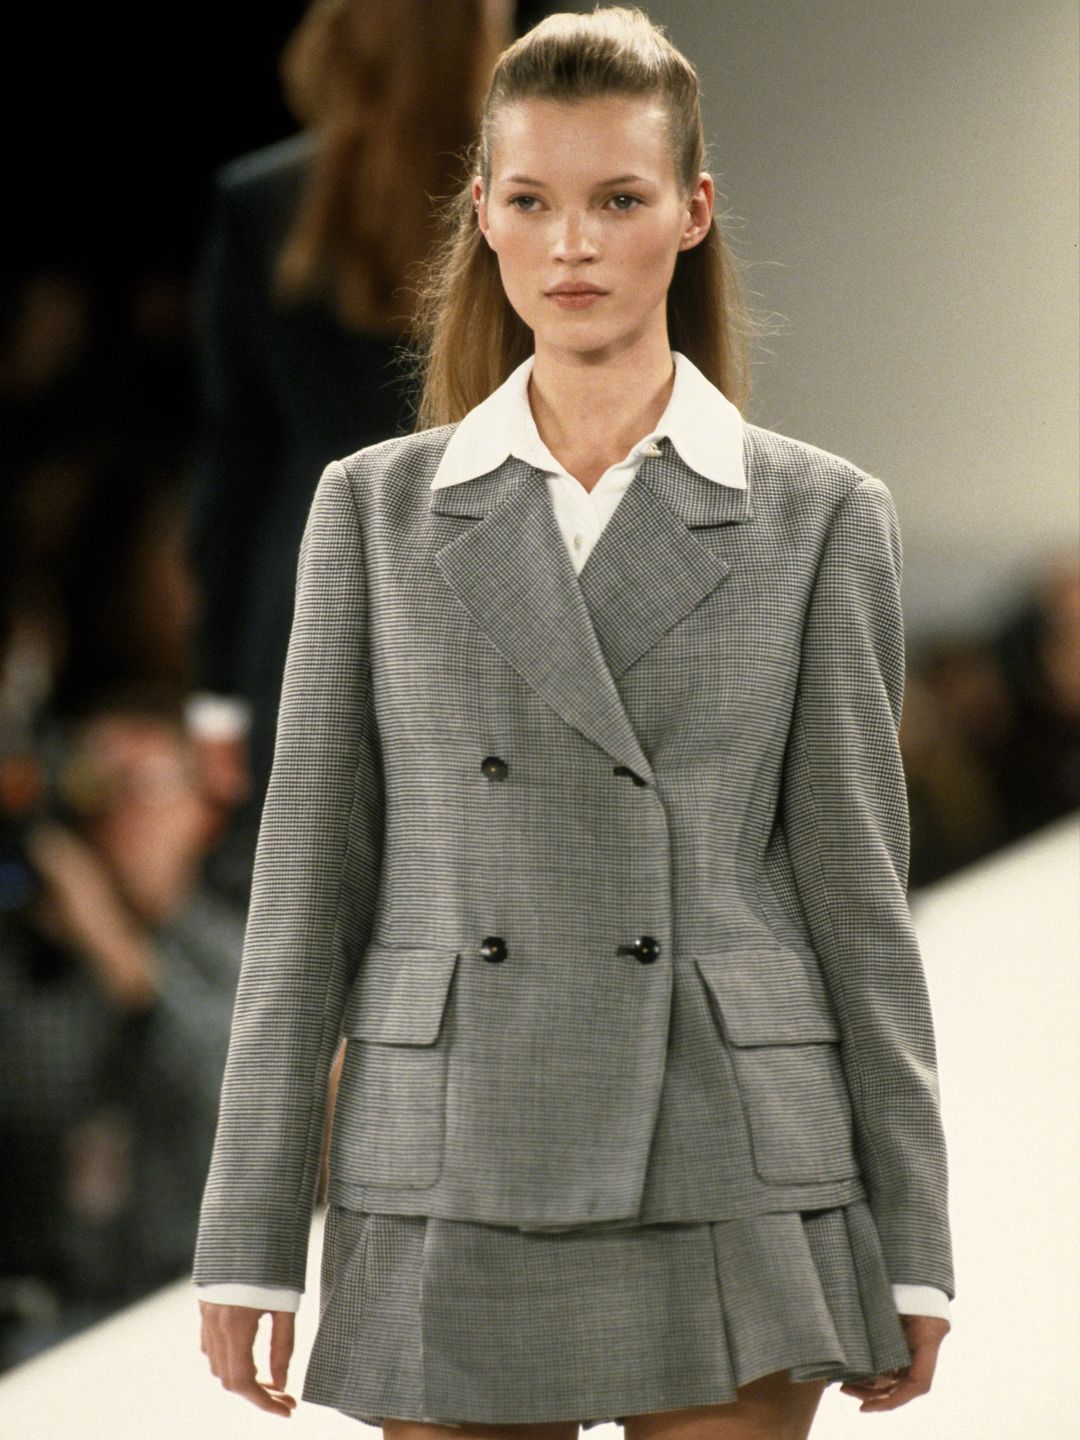 Kate Moss walks the Isaac Mizrahi Spring show in 1994 wearing a grey mini skirt and blazer combo